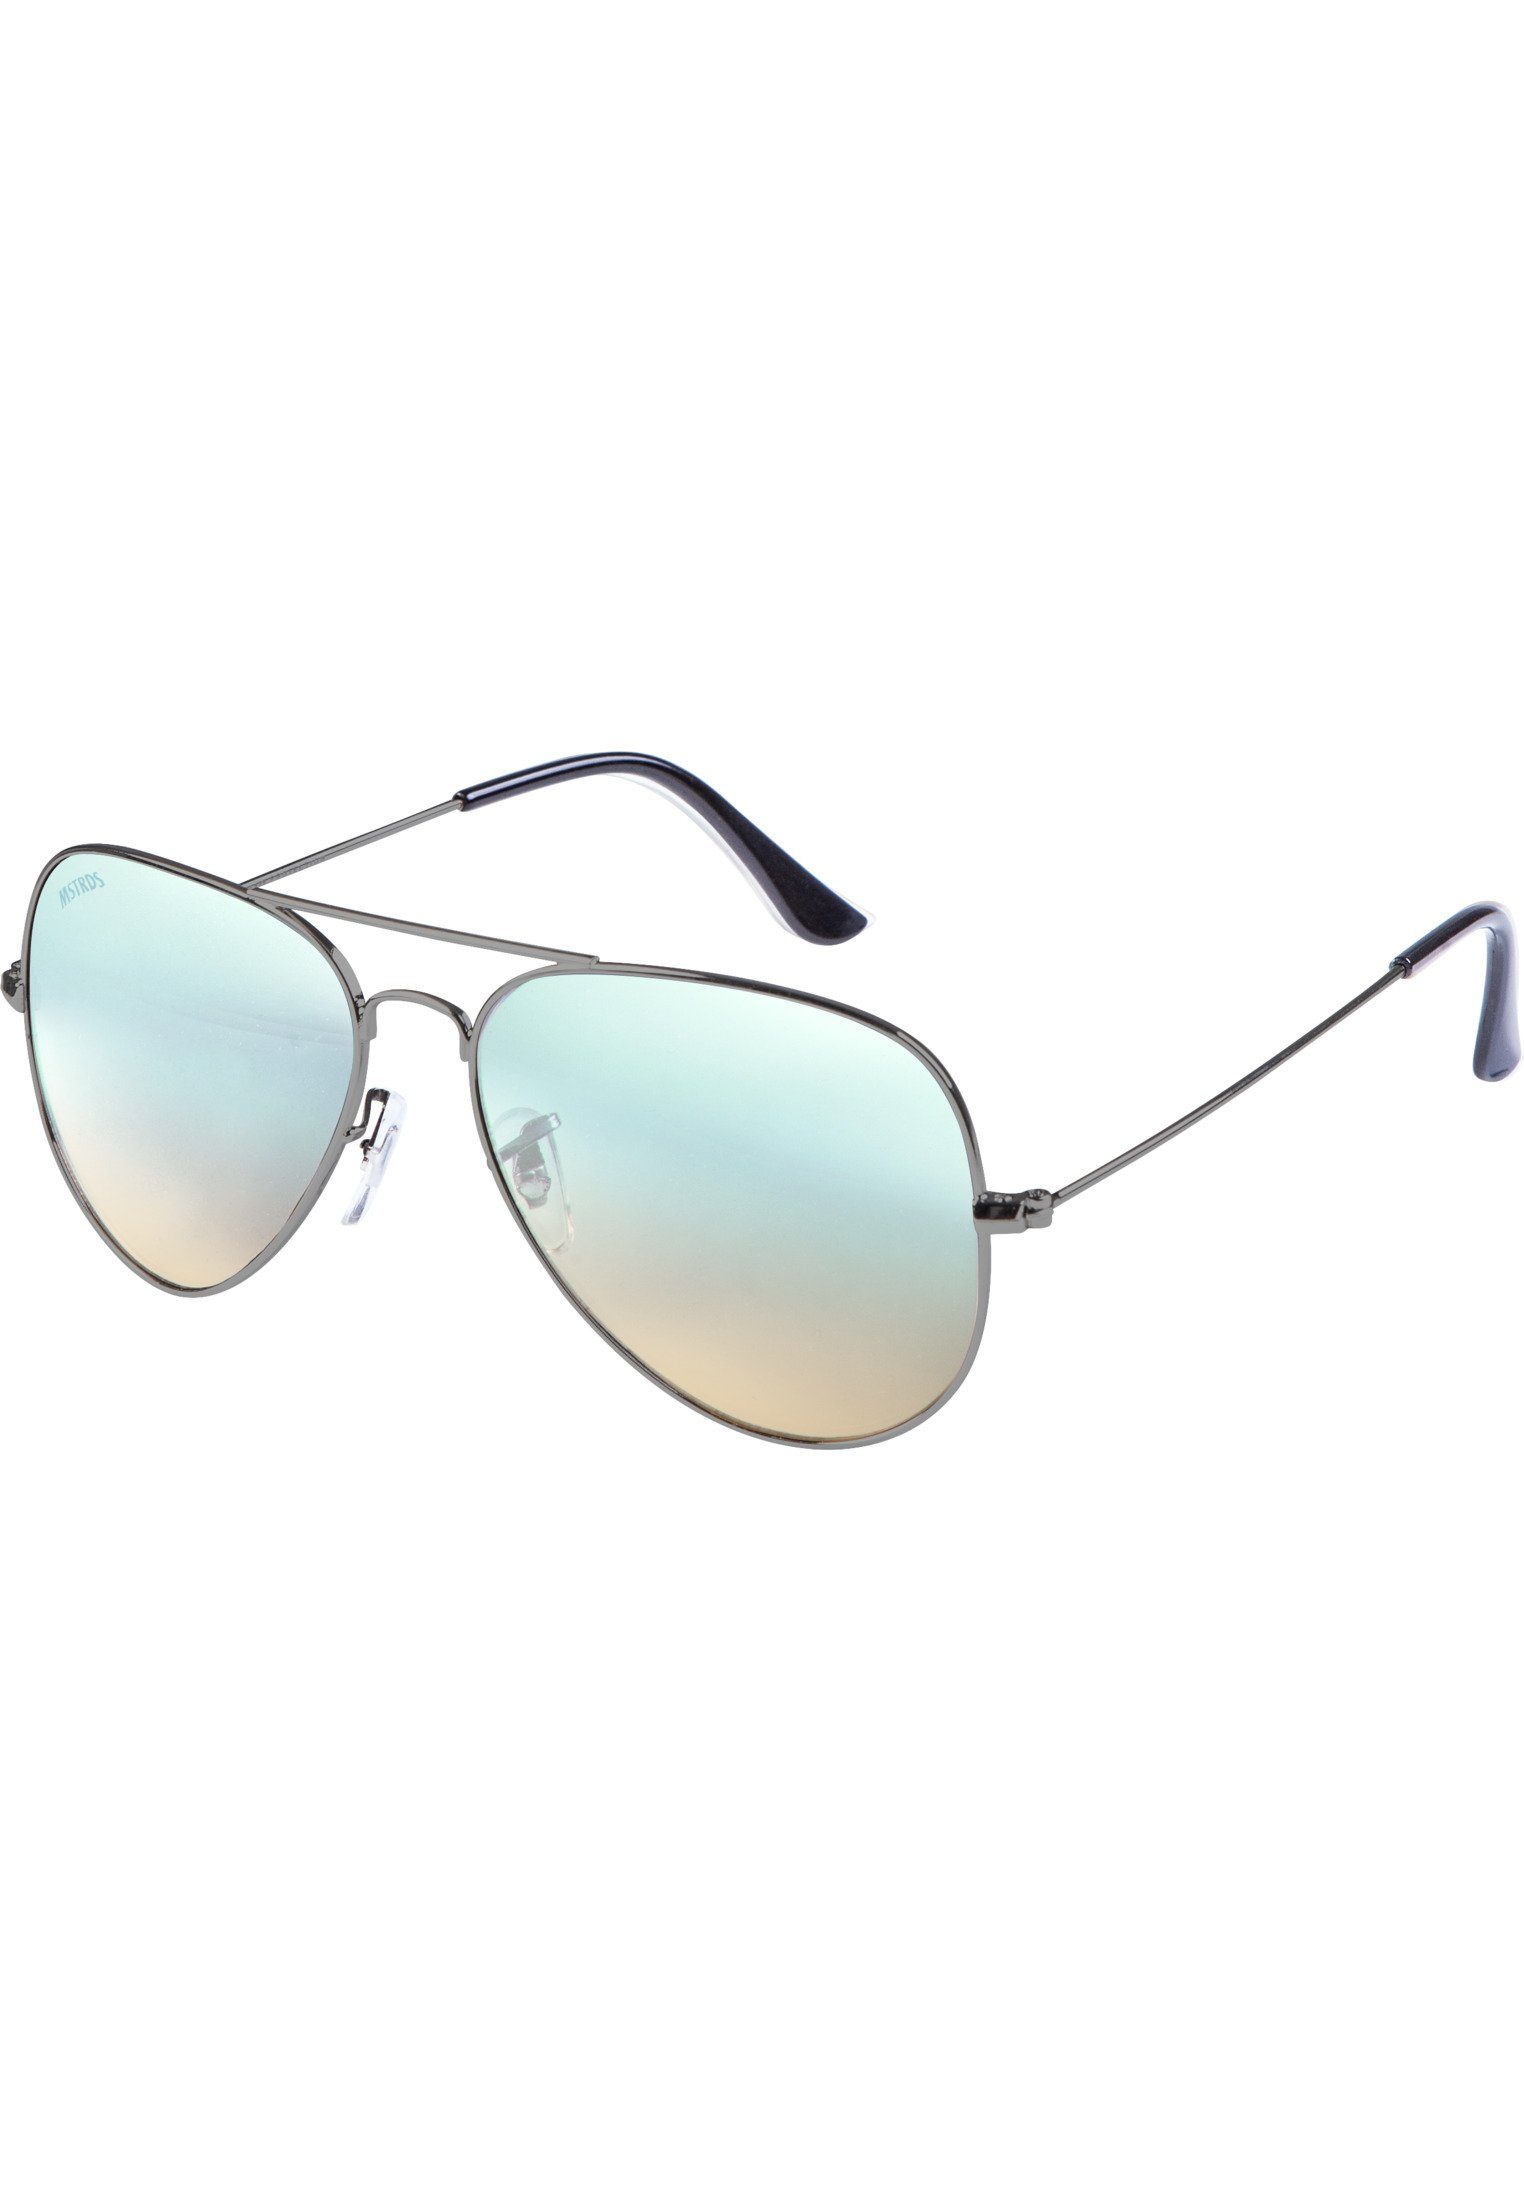 MSTRDS Sonnenbrille Accessoires Sunglasses gun/blue PureAv